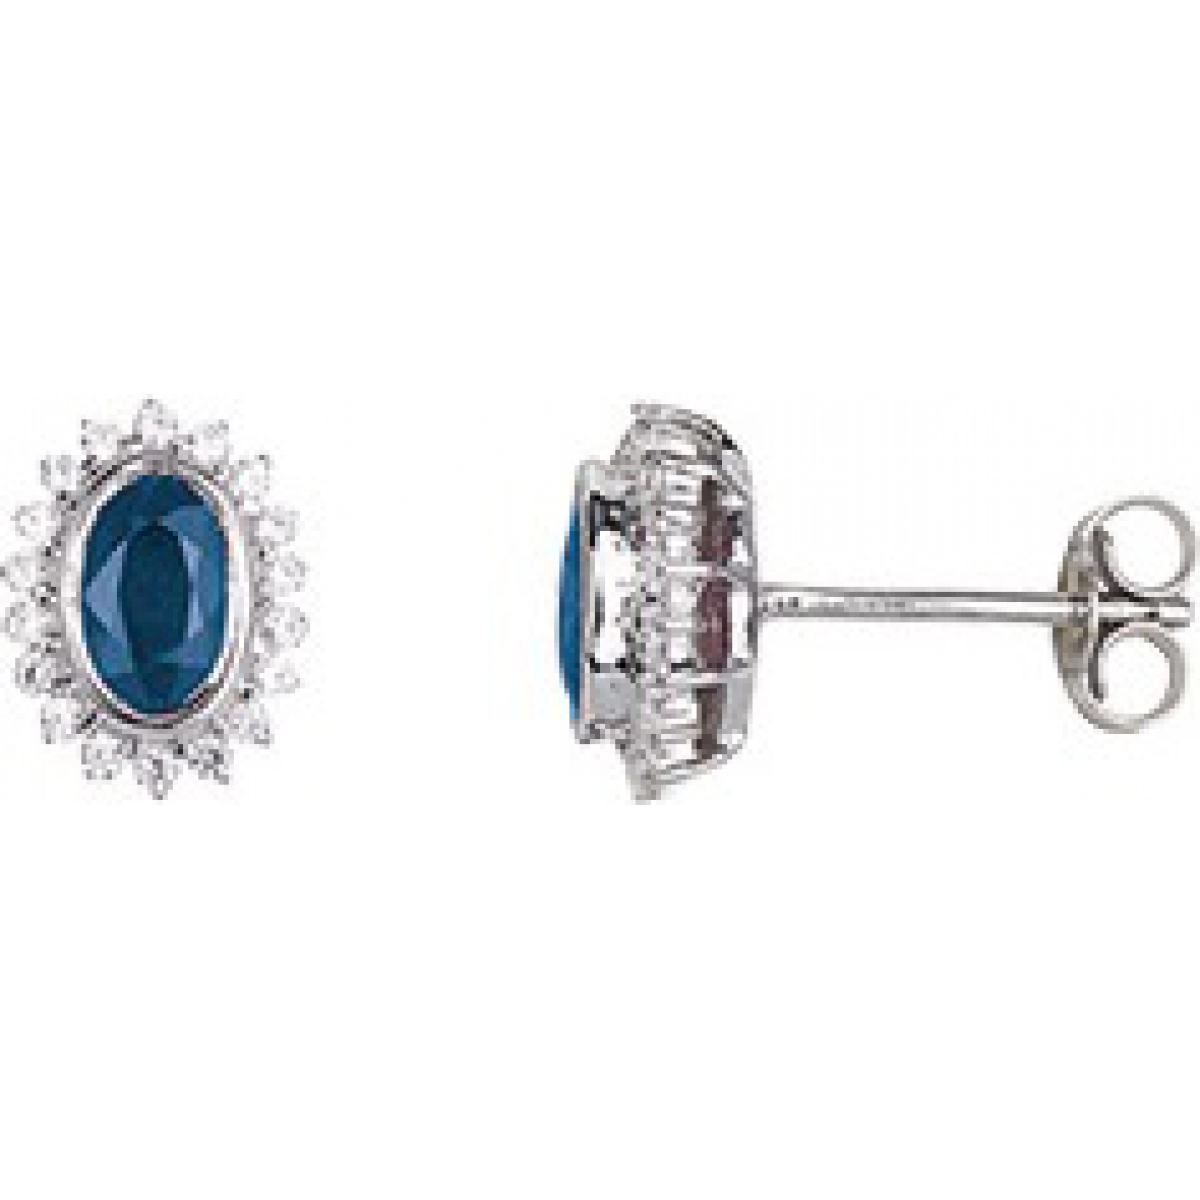 Earrings pair w. sapphire and cz rh18K WG  Lua Blanca  2.3063.S1.0